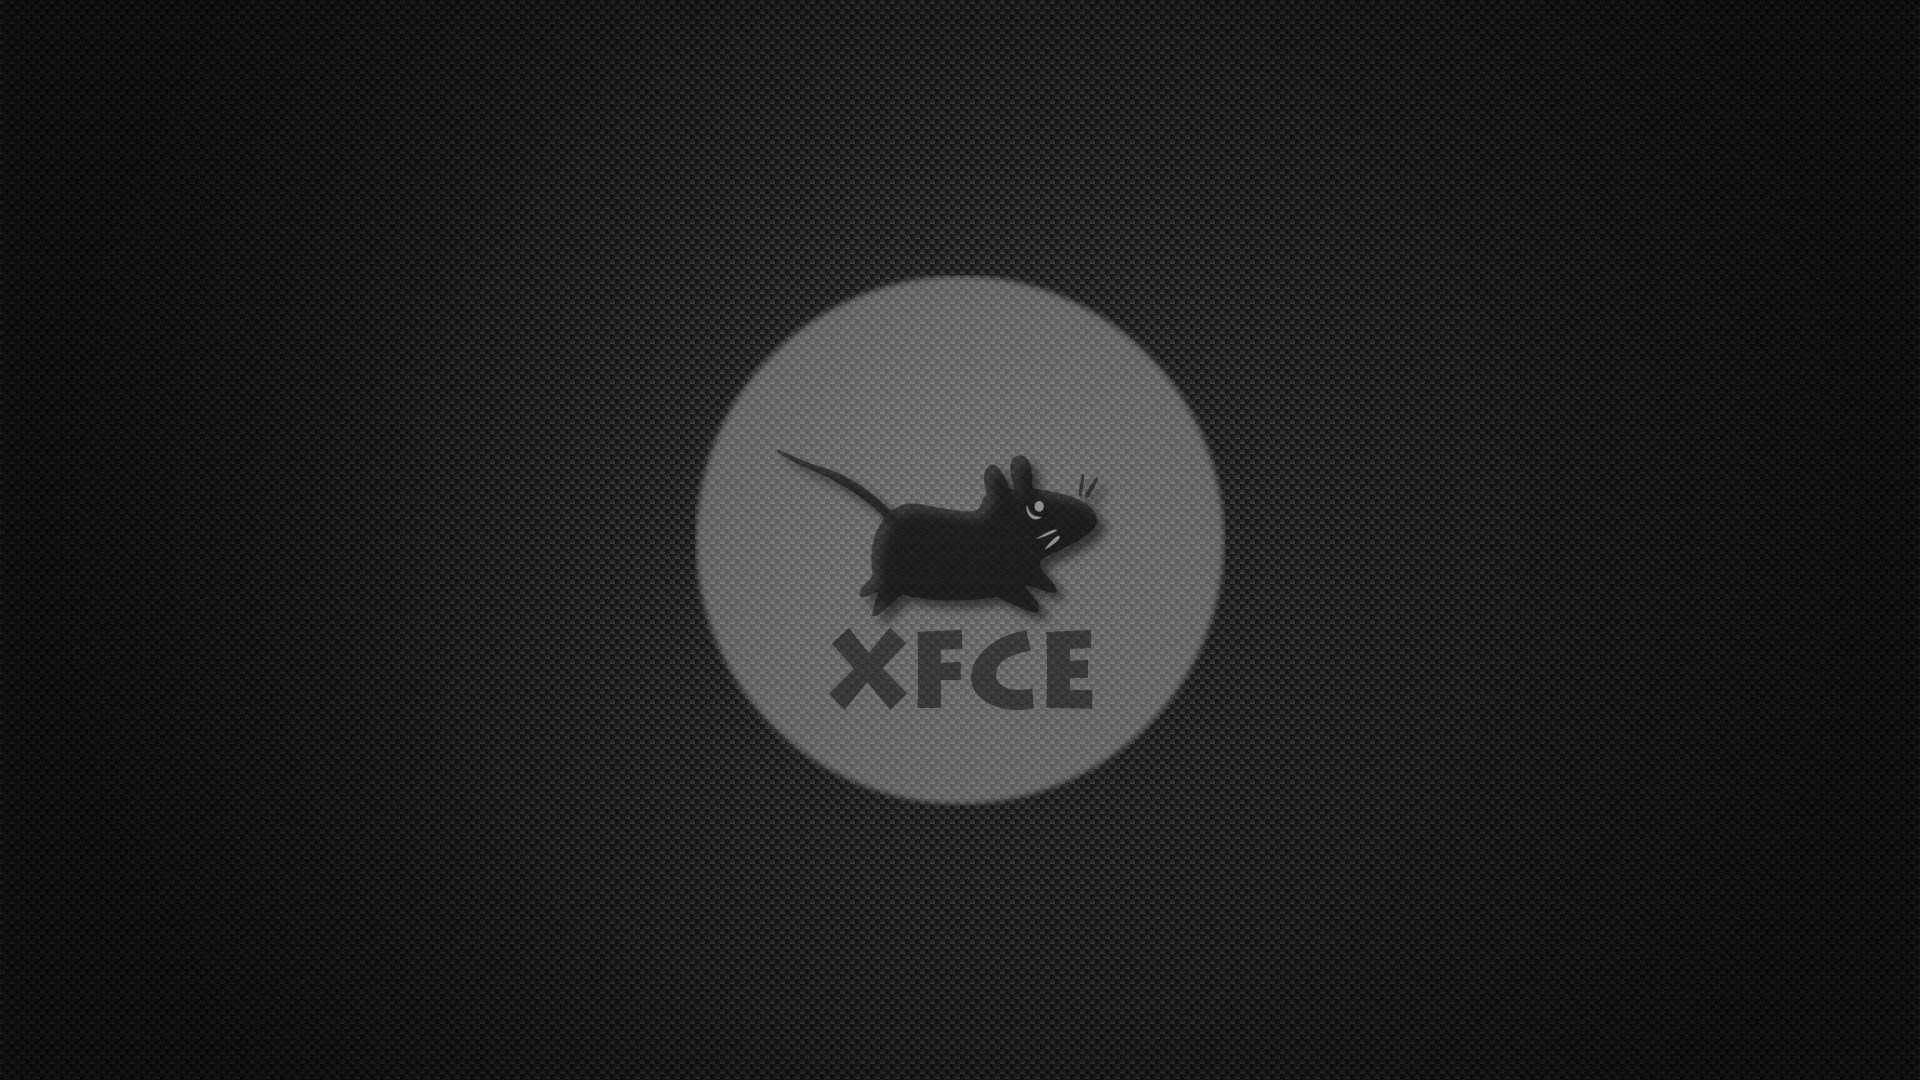 Logos mice fibers xfce logo carbon fiber mouse desktop hd wallpaper